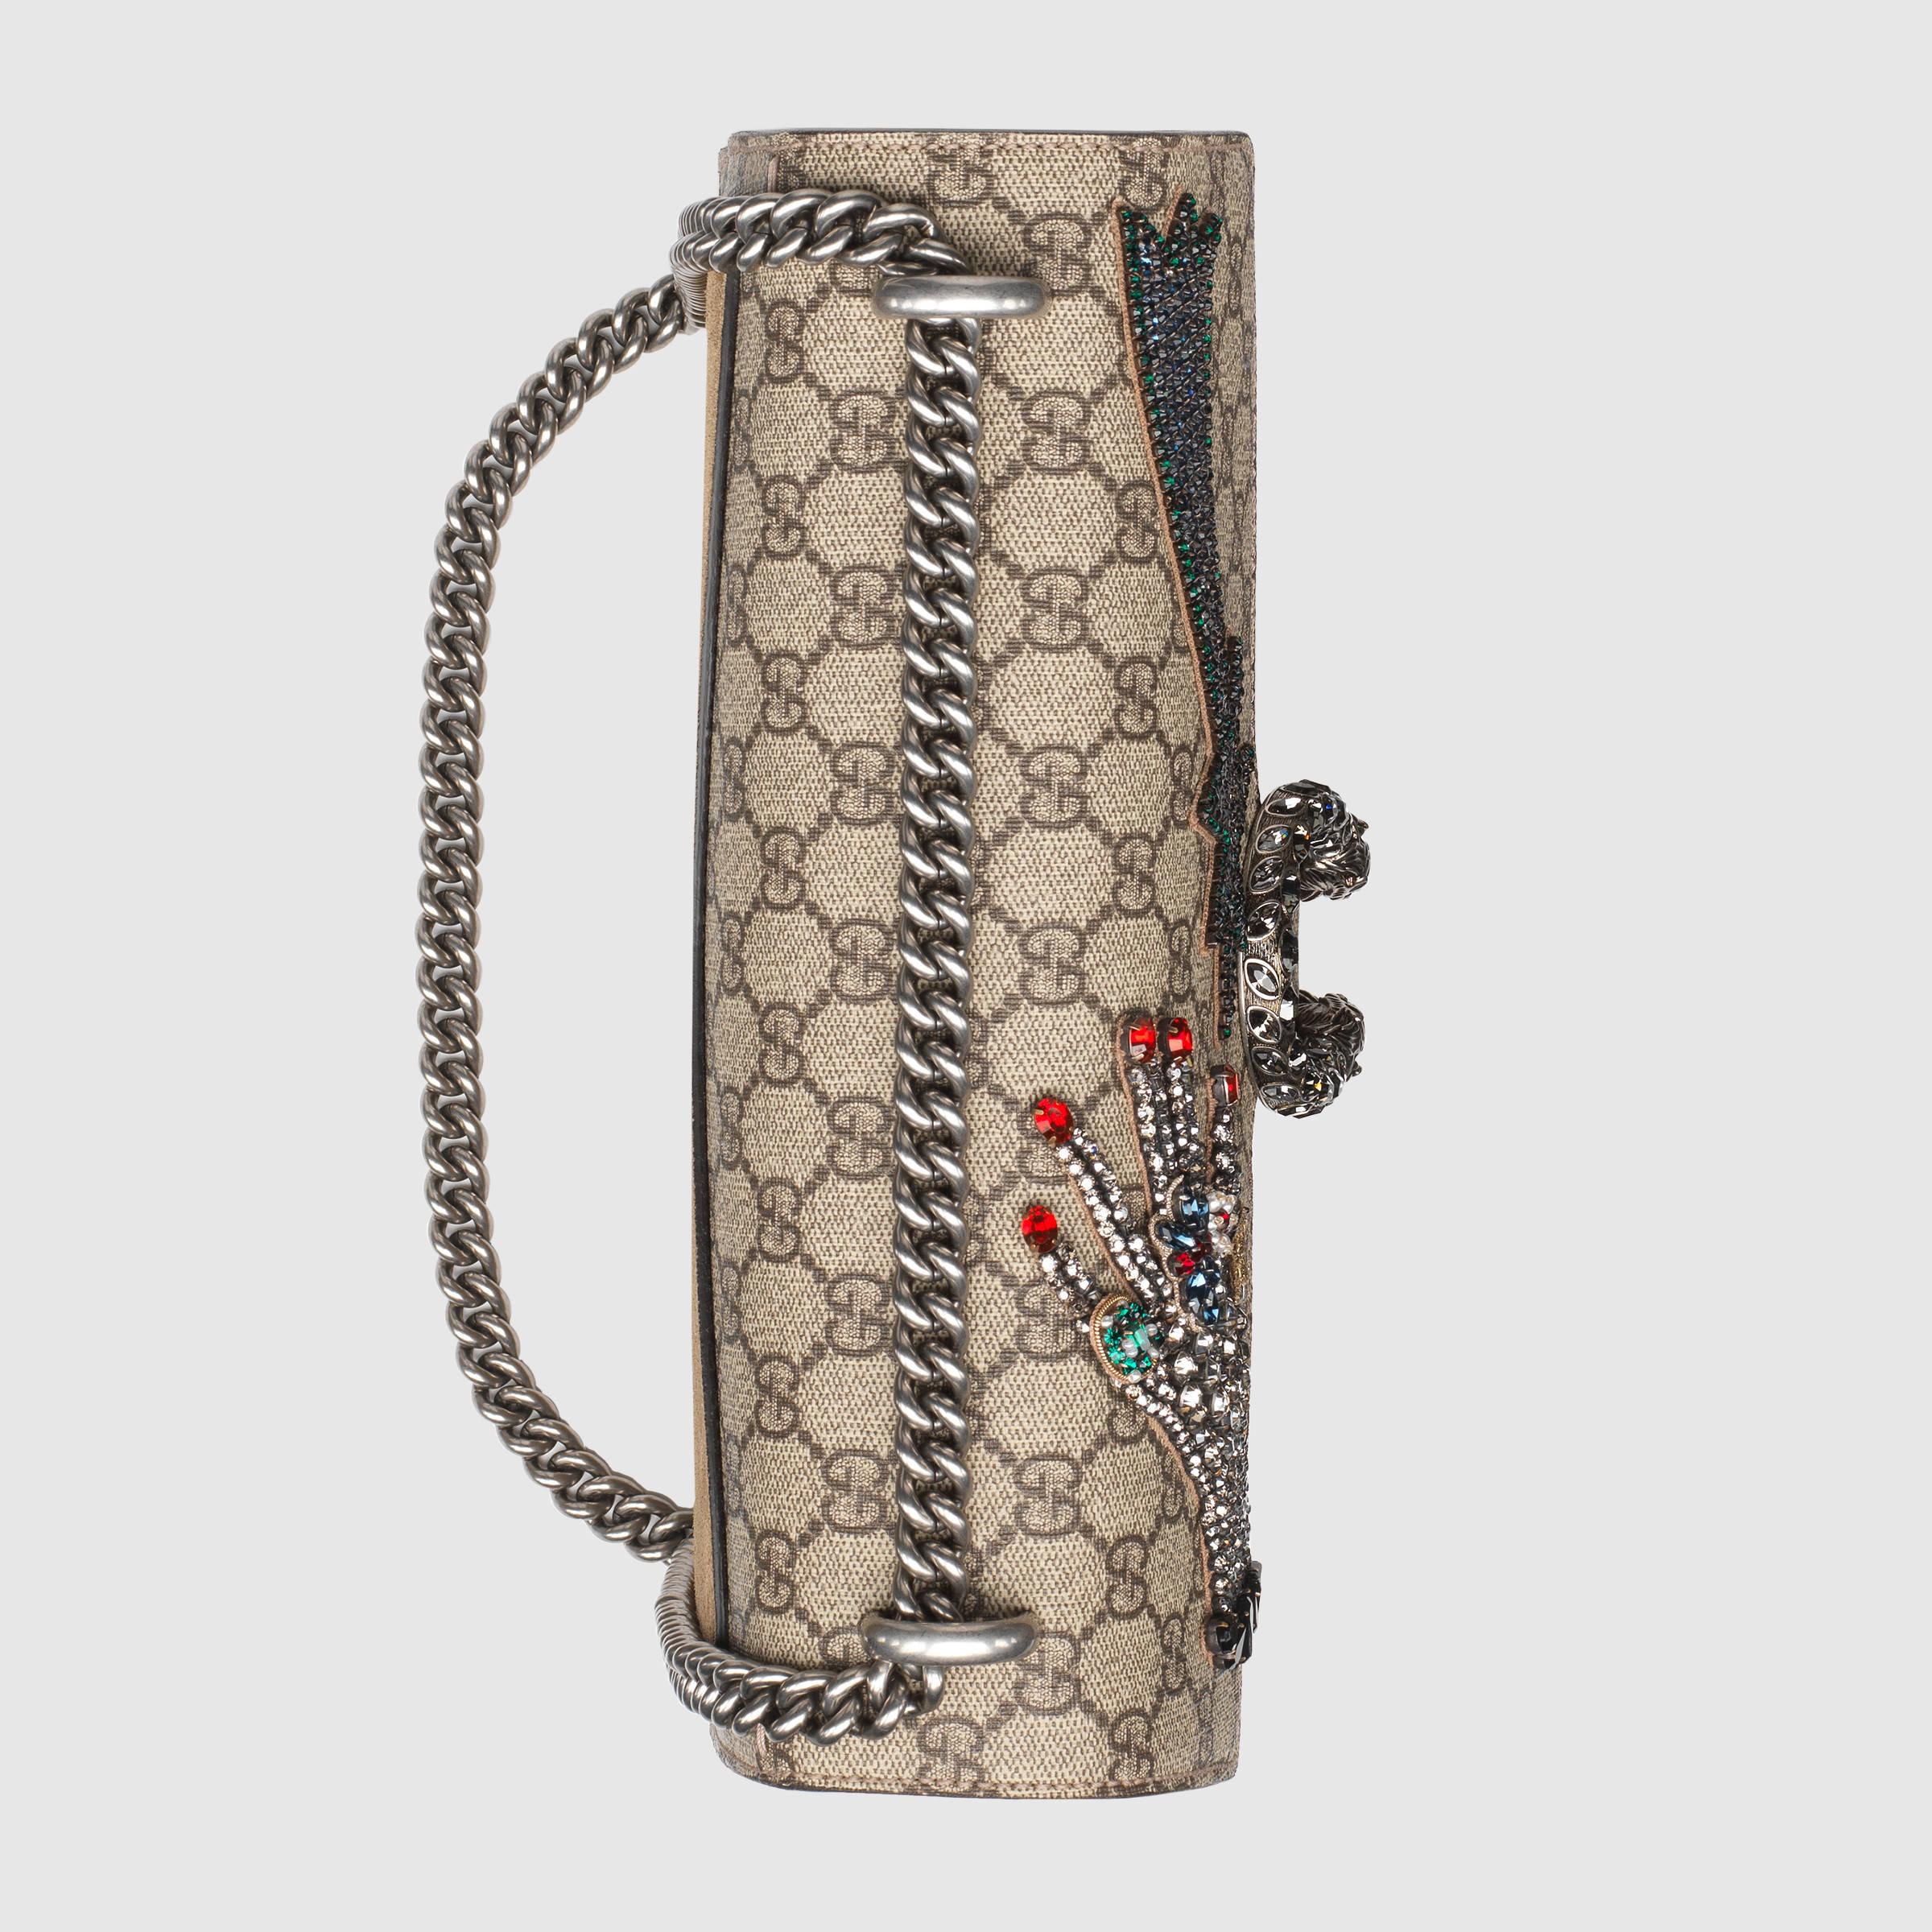 Lyst - Gucci Dionysus Embroidered GG Supreme Canvas Shoulder Bag in Natural